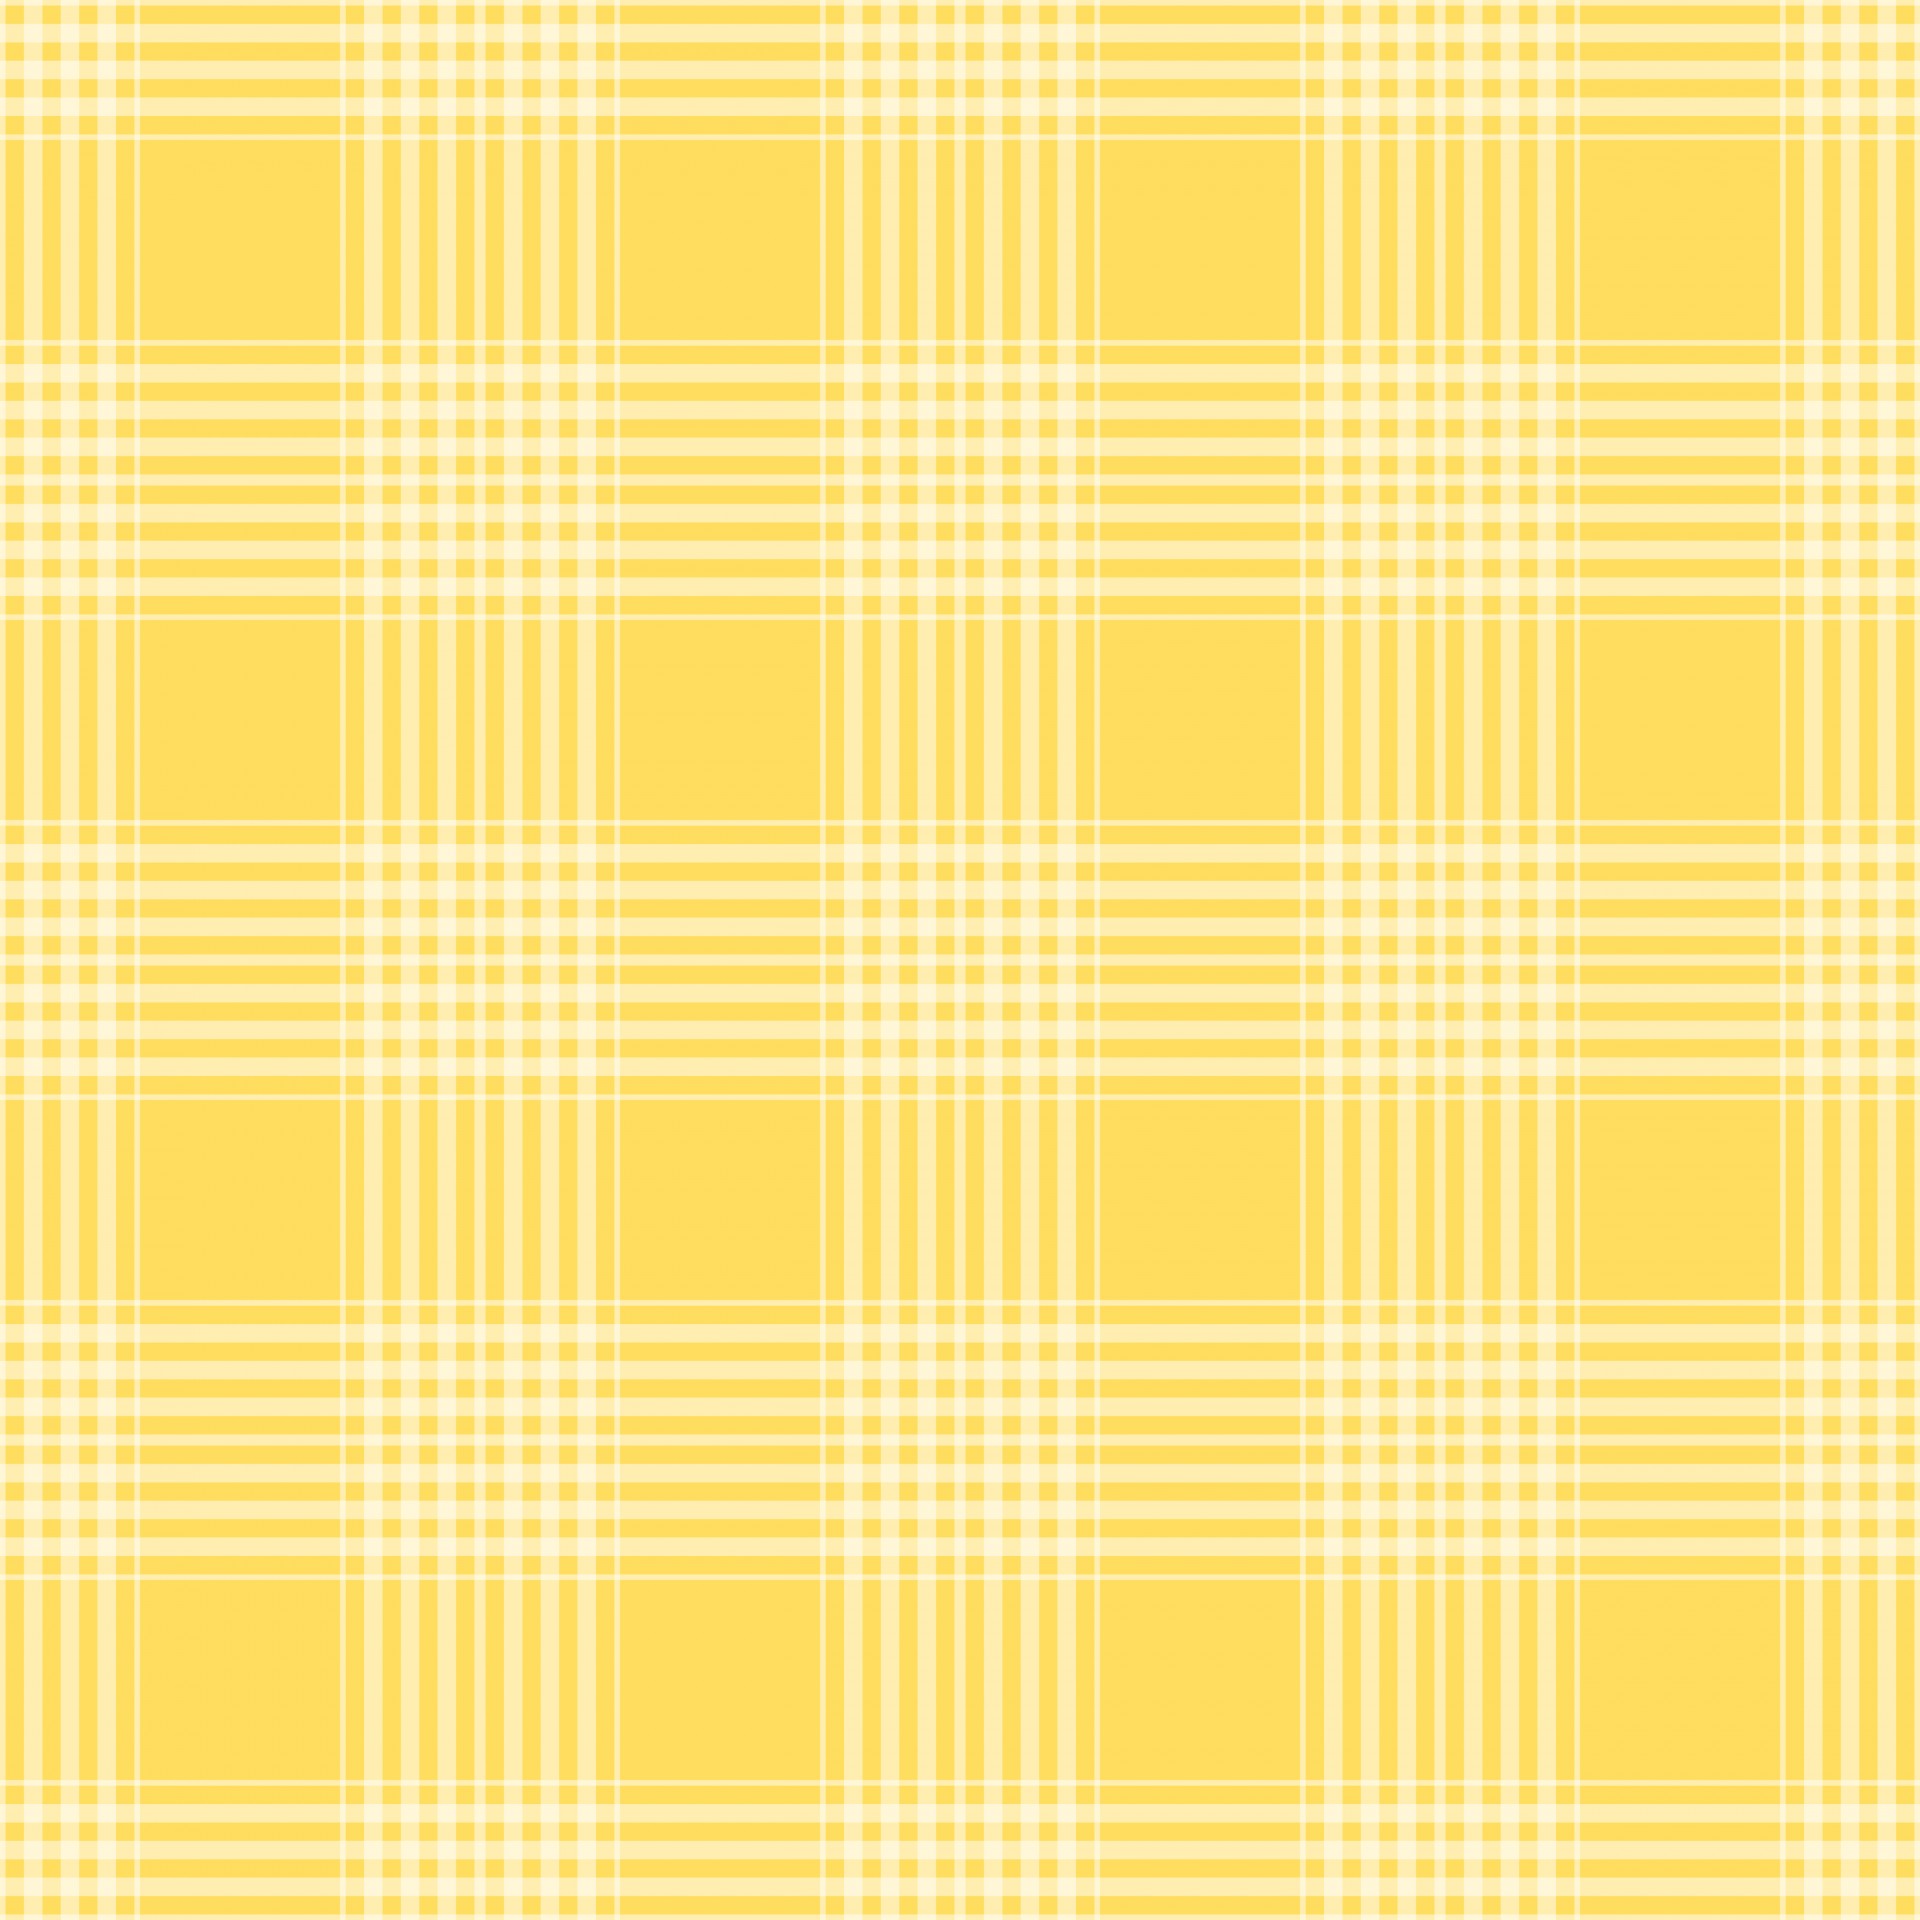 Checks,tartan,plaid,diagonal,yellow - free image from, fundo